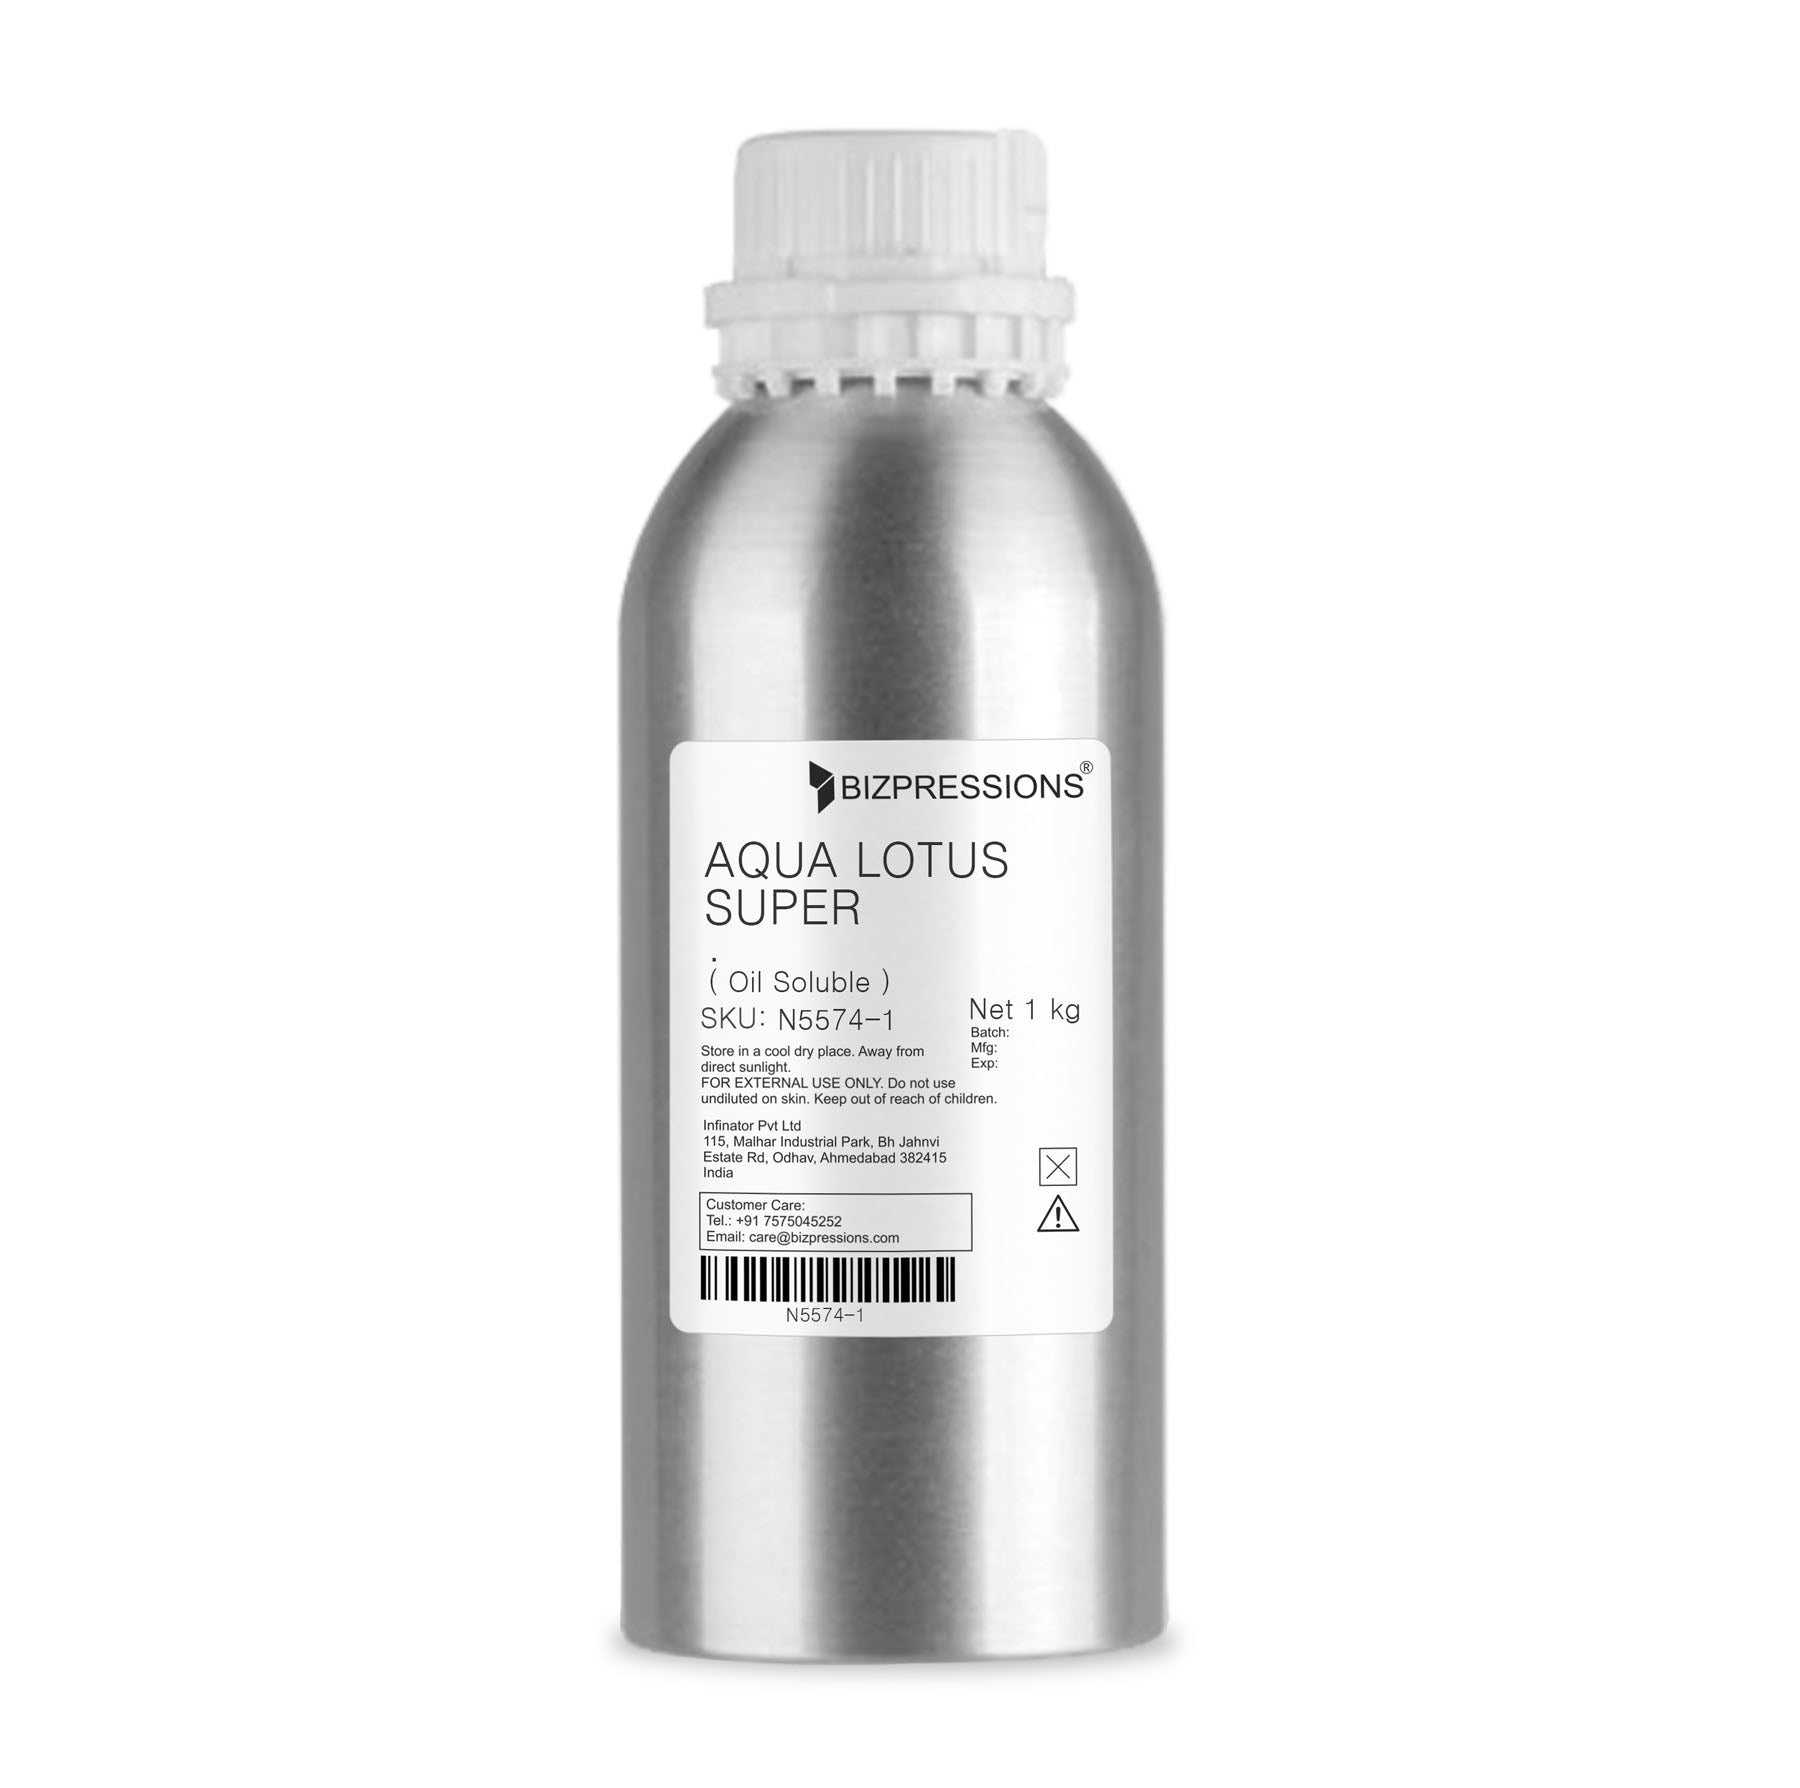 AQUA LOTUS SUPER - Fragrance ( Oil Soluble ) - 1 kg